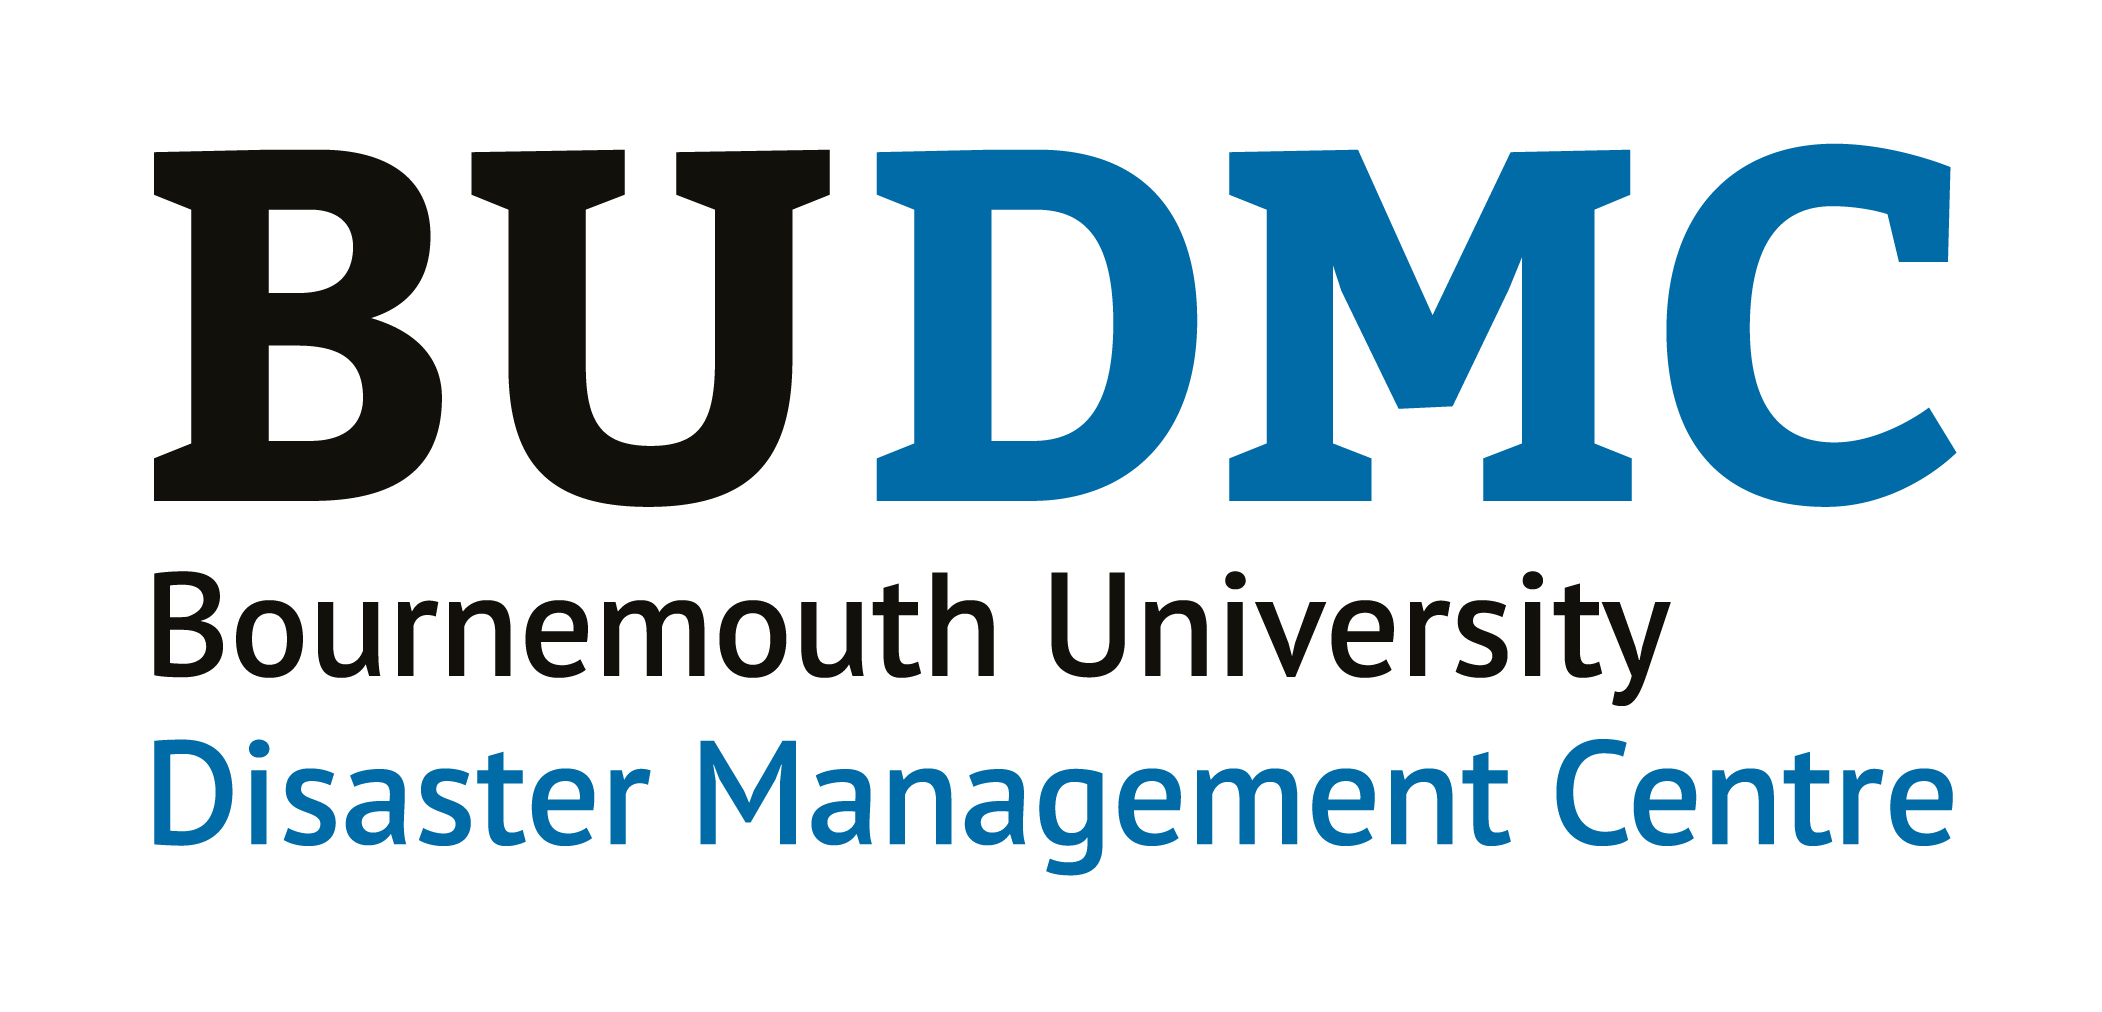 BU Disaster Management Centre logo